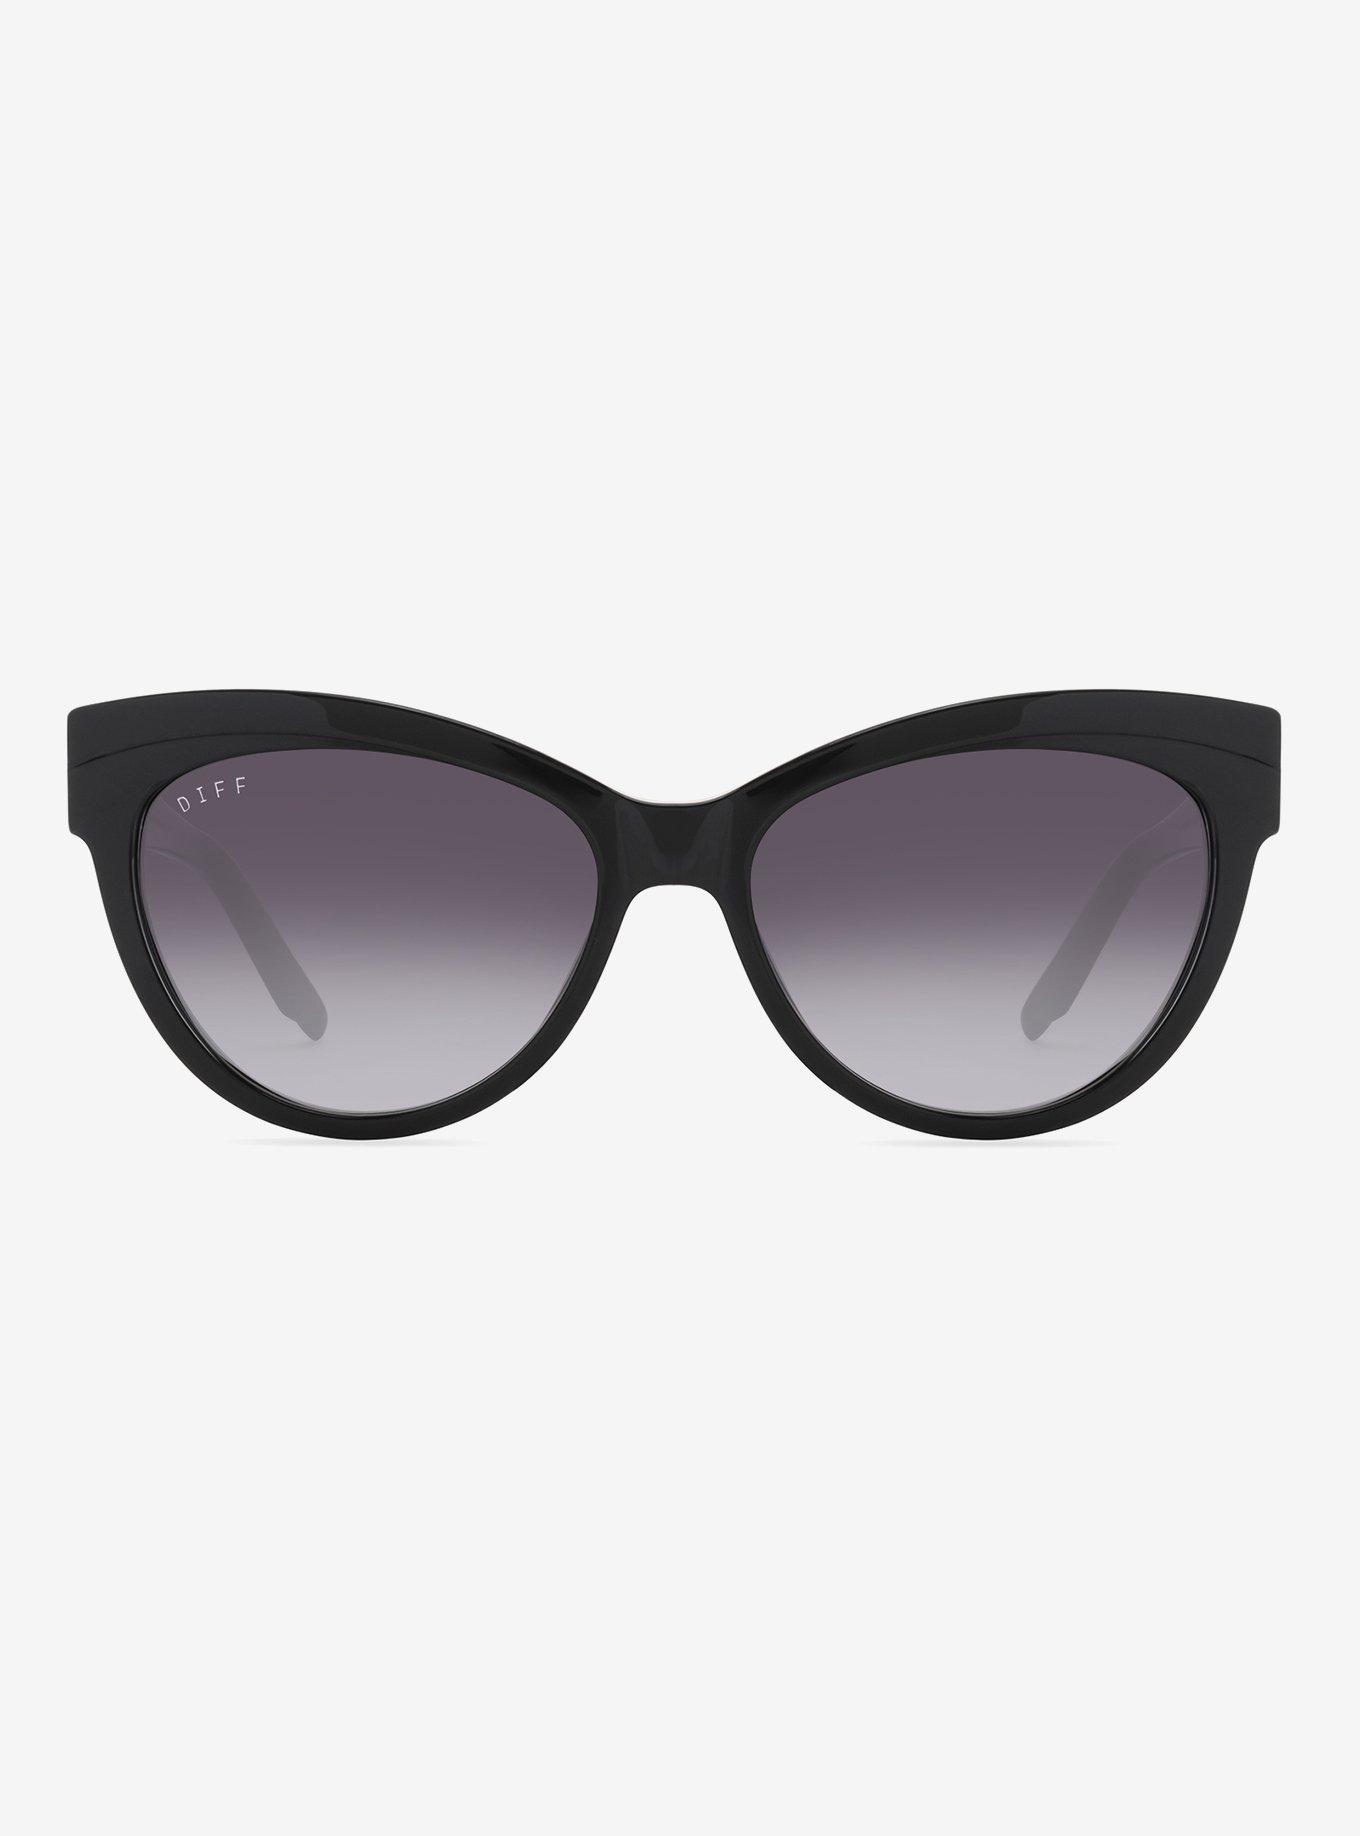 Marilyn Monroe X DIFF Cat Eye Sunglasses | Her Universe